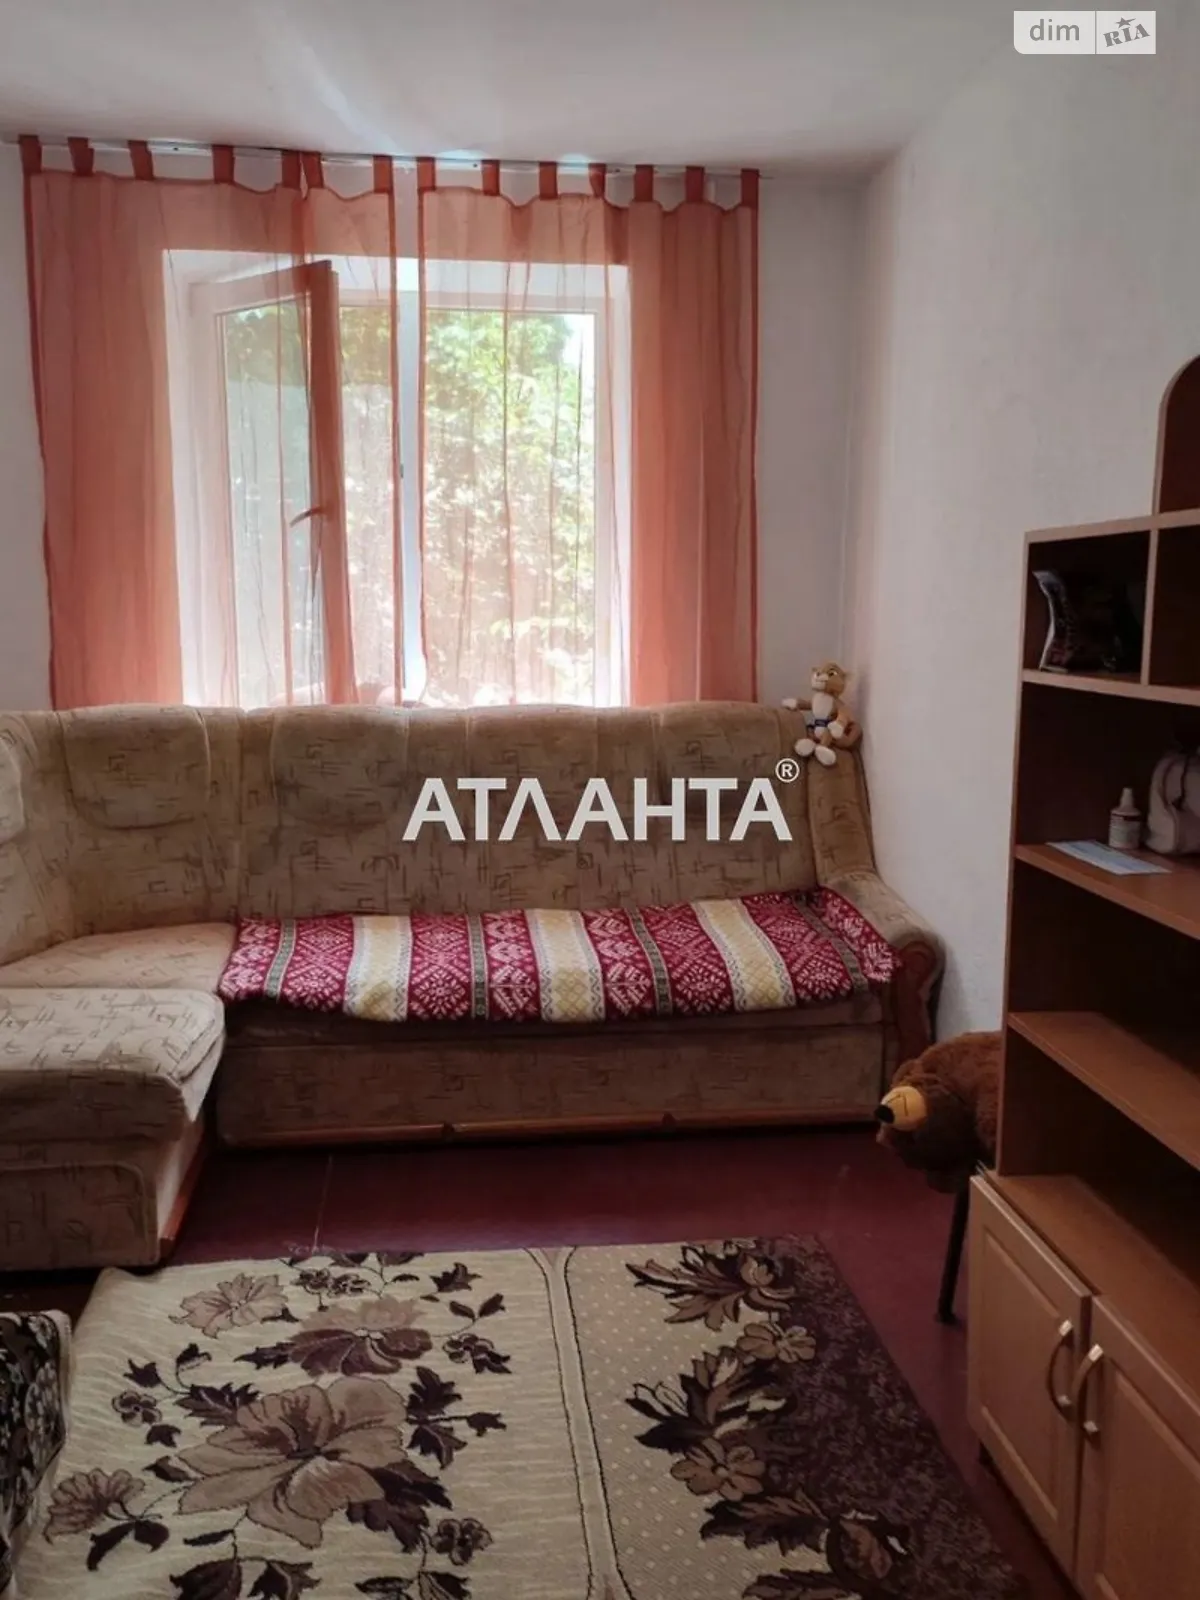 Продается комната 20 кв. м в Одессе, цена: 8200 $ - фото 1